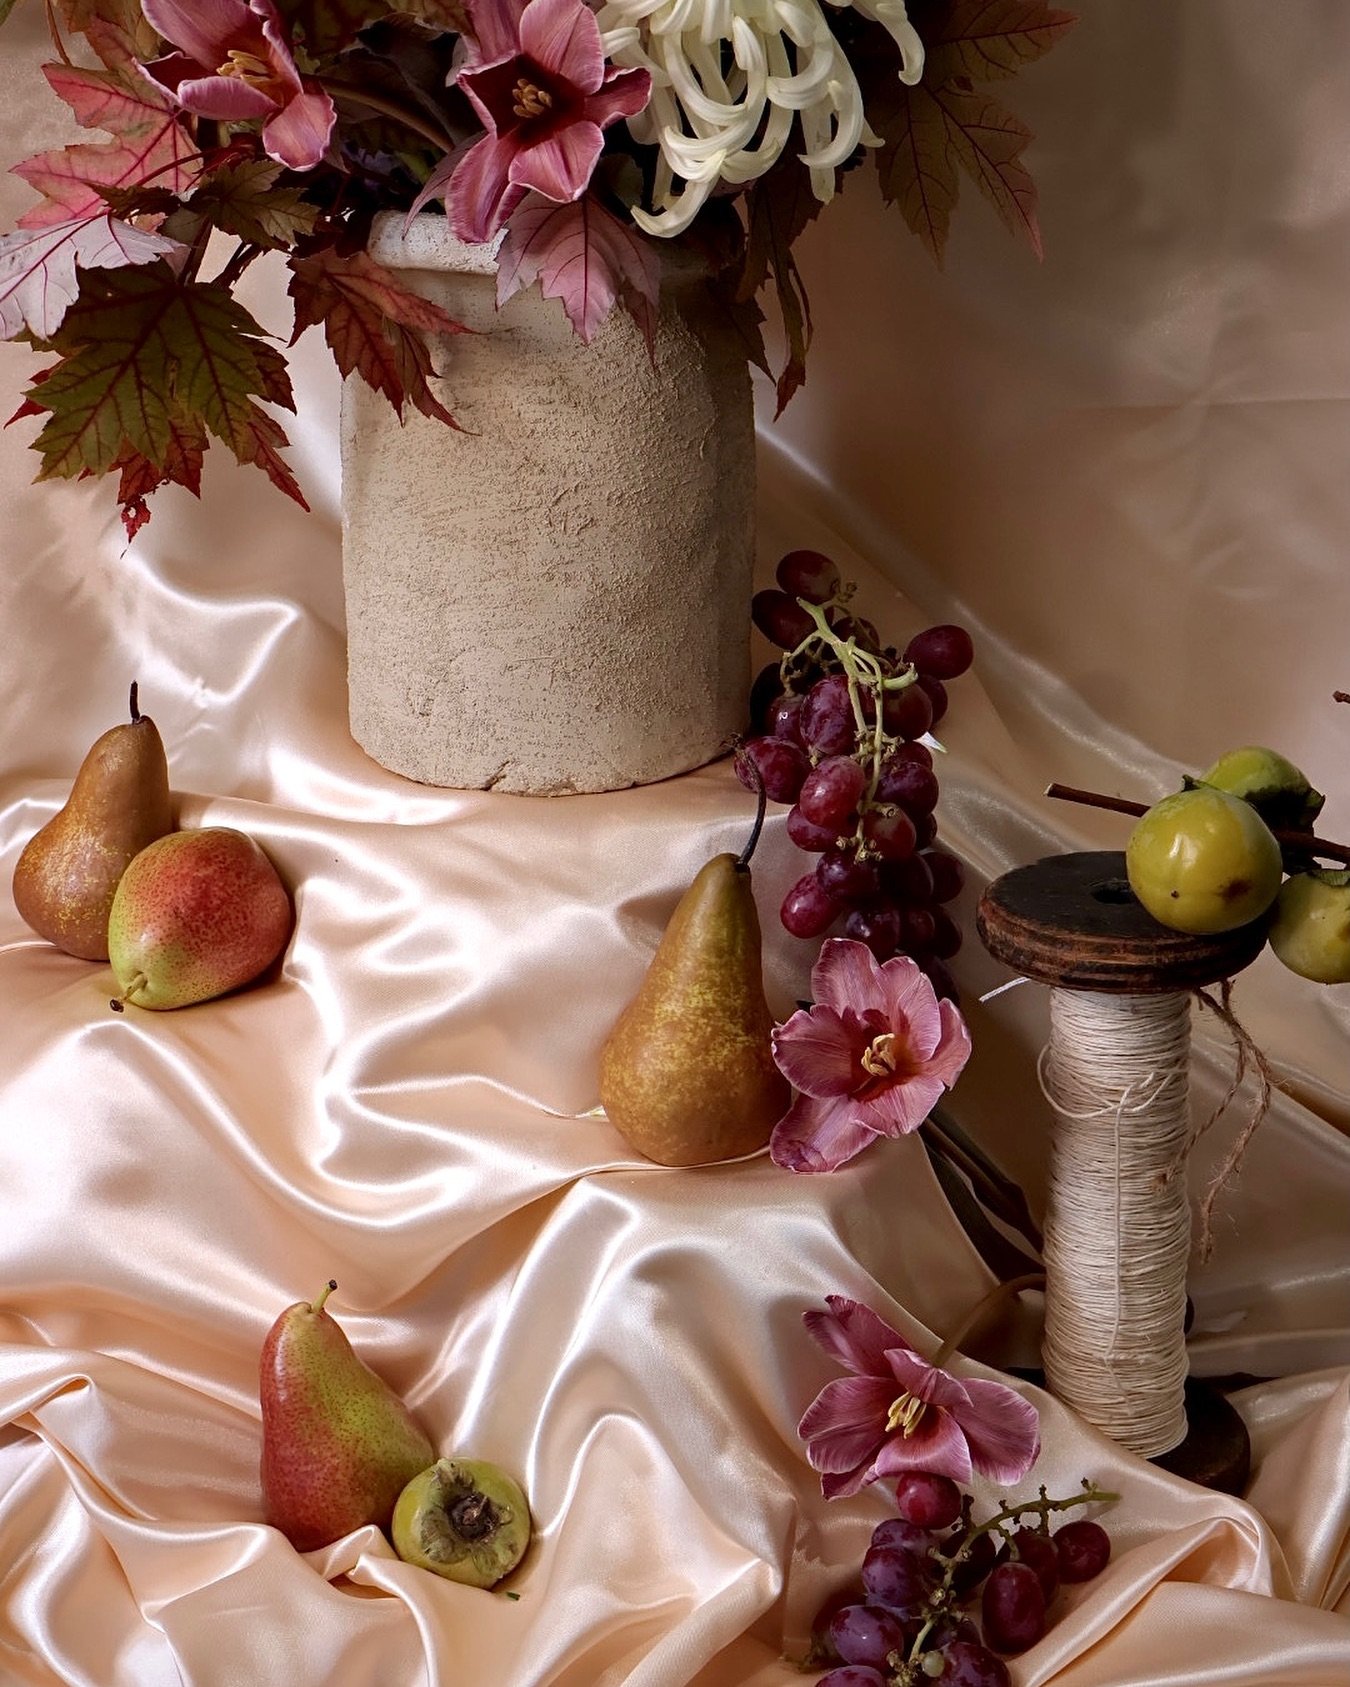 Fruit and flower styling 🍇🍒 

#dutchmasters #fruitandflowers #mothersdaygift